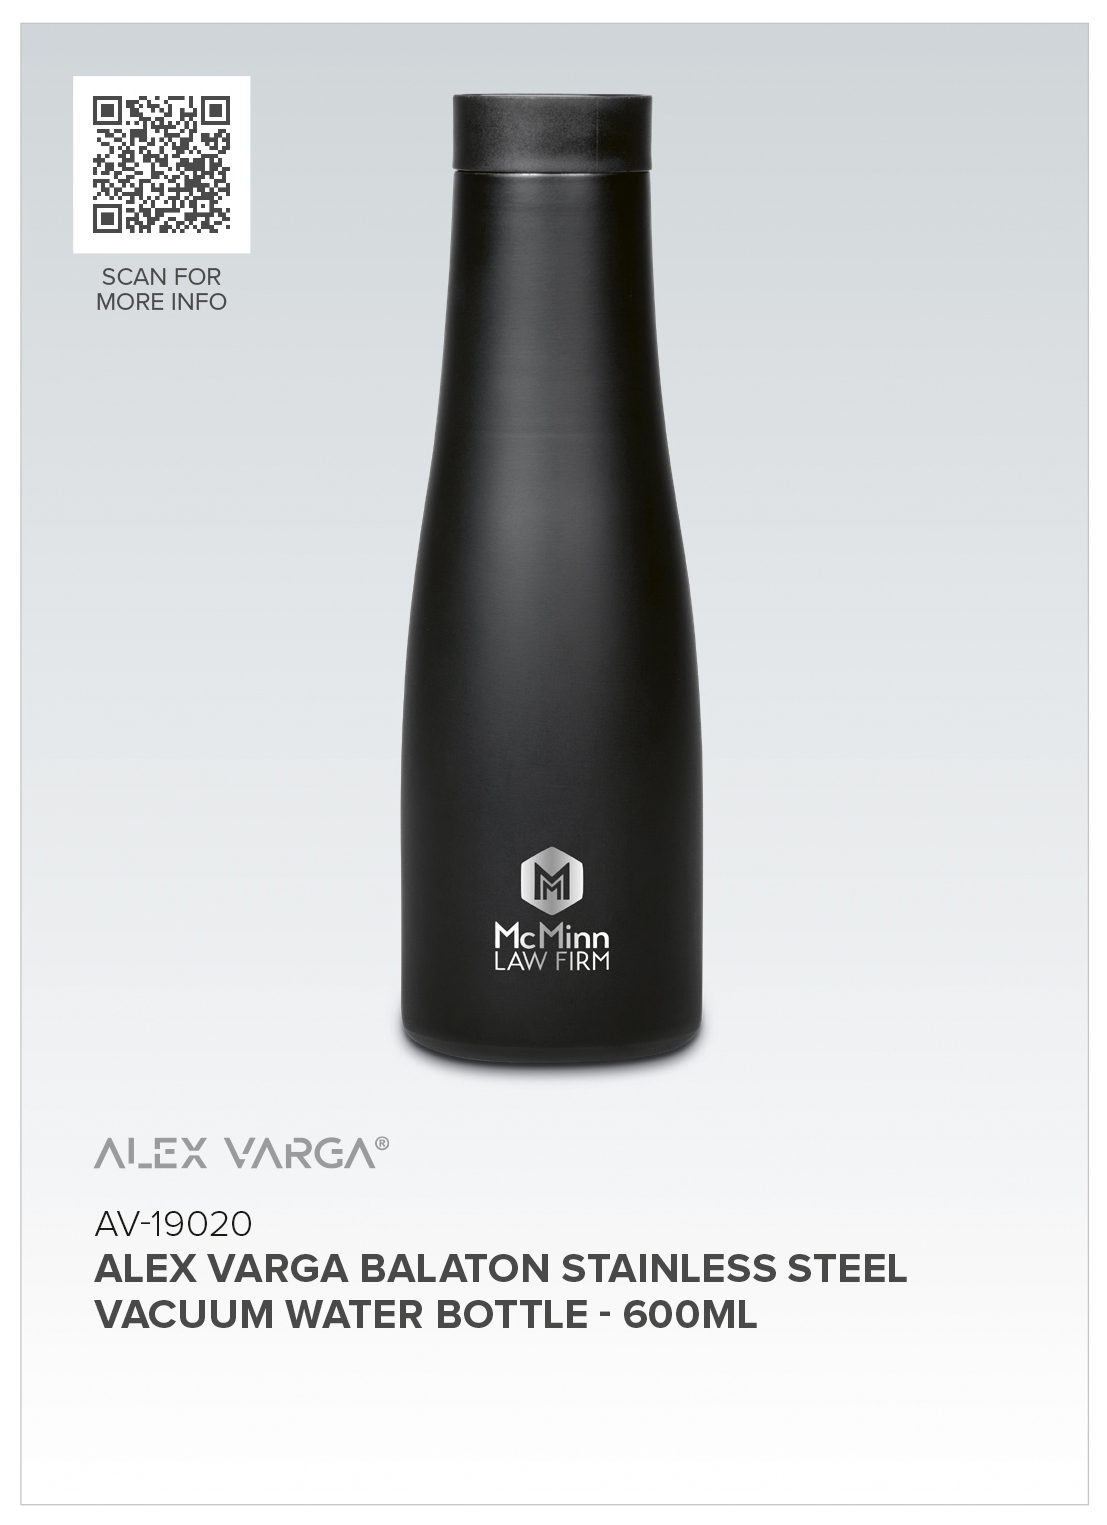 AV-19020 - Alex Varga Balaton Stainless Steel Vacuum Water Bottle - 600ml - Catalogue Image